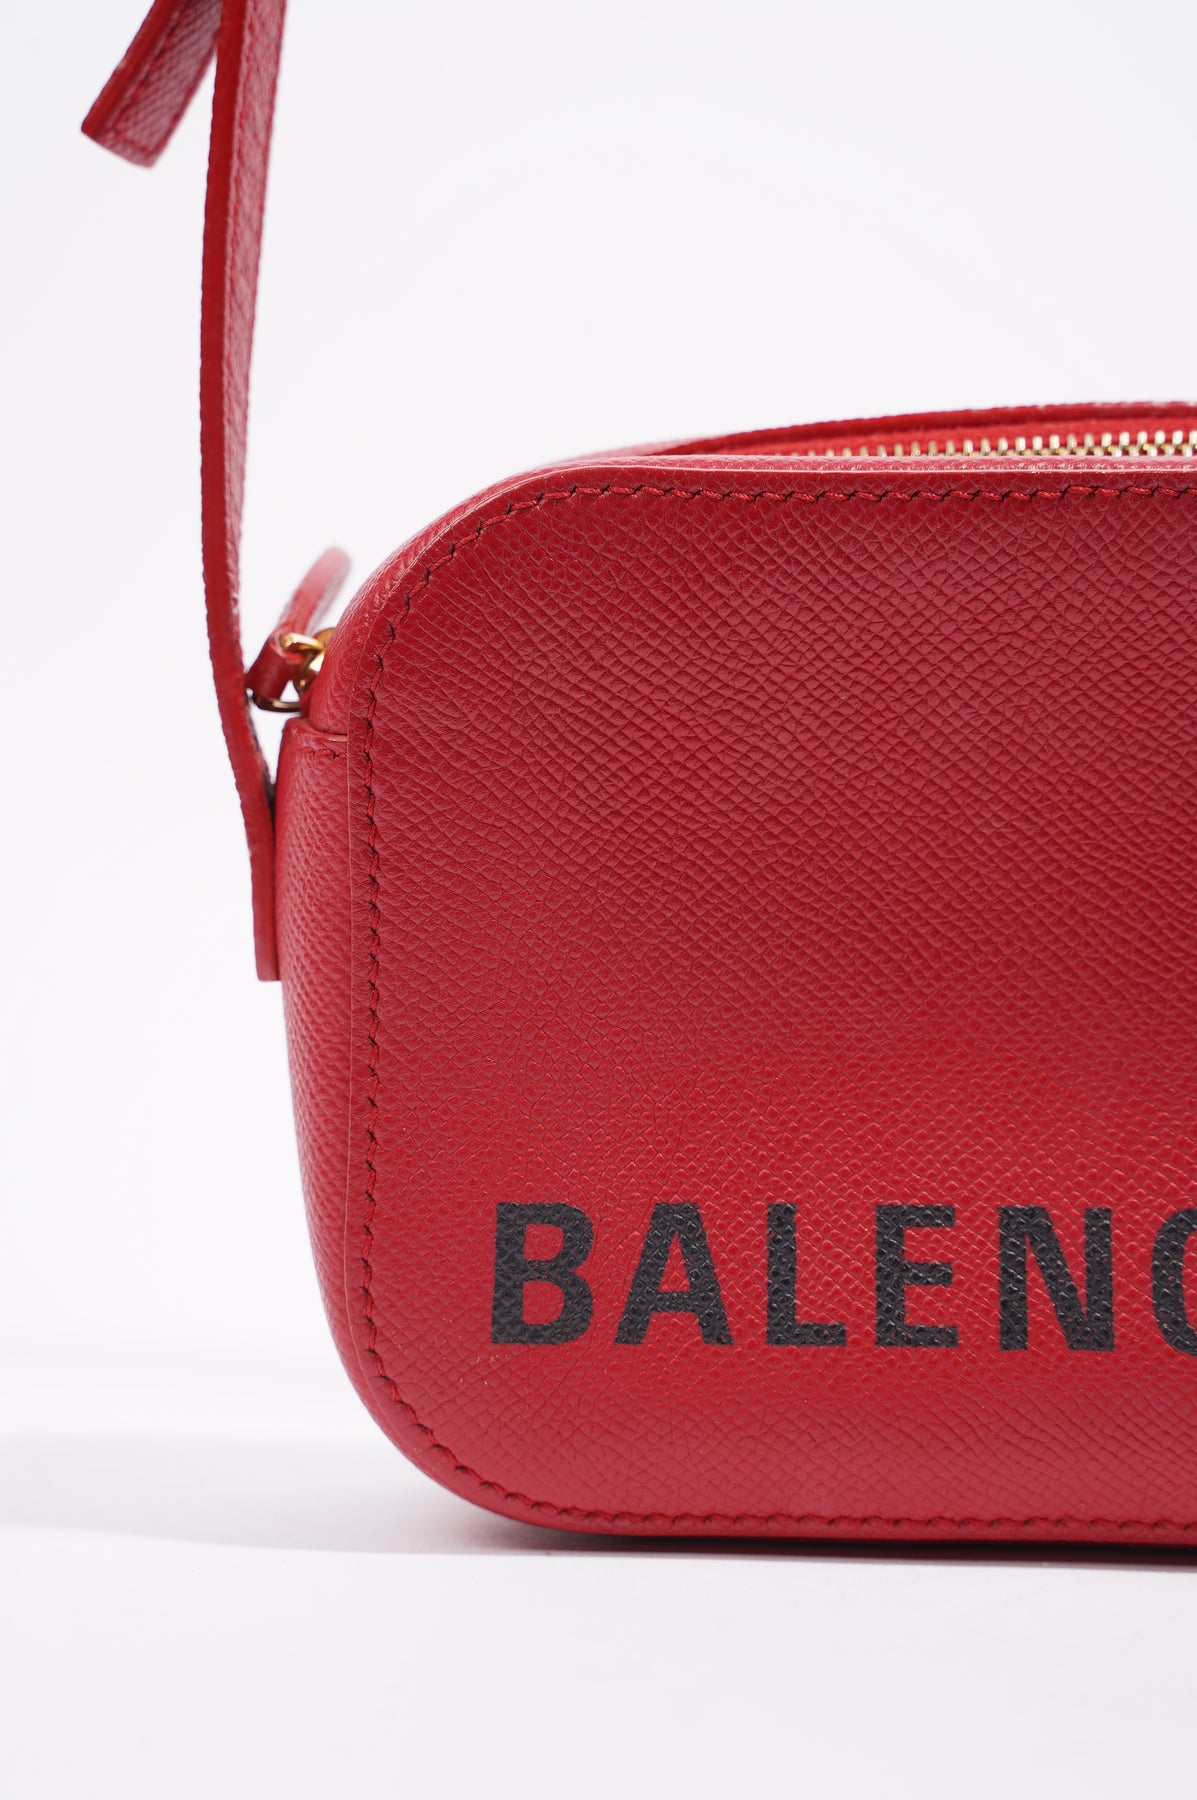 NEW Authentic Balenciaga Women's Ville XS Camera Bag in Black